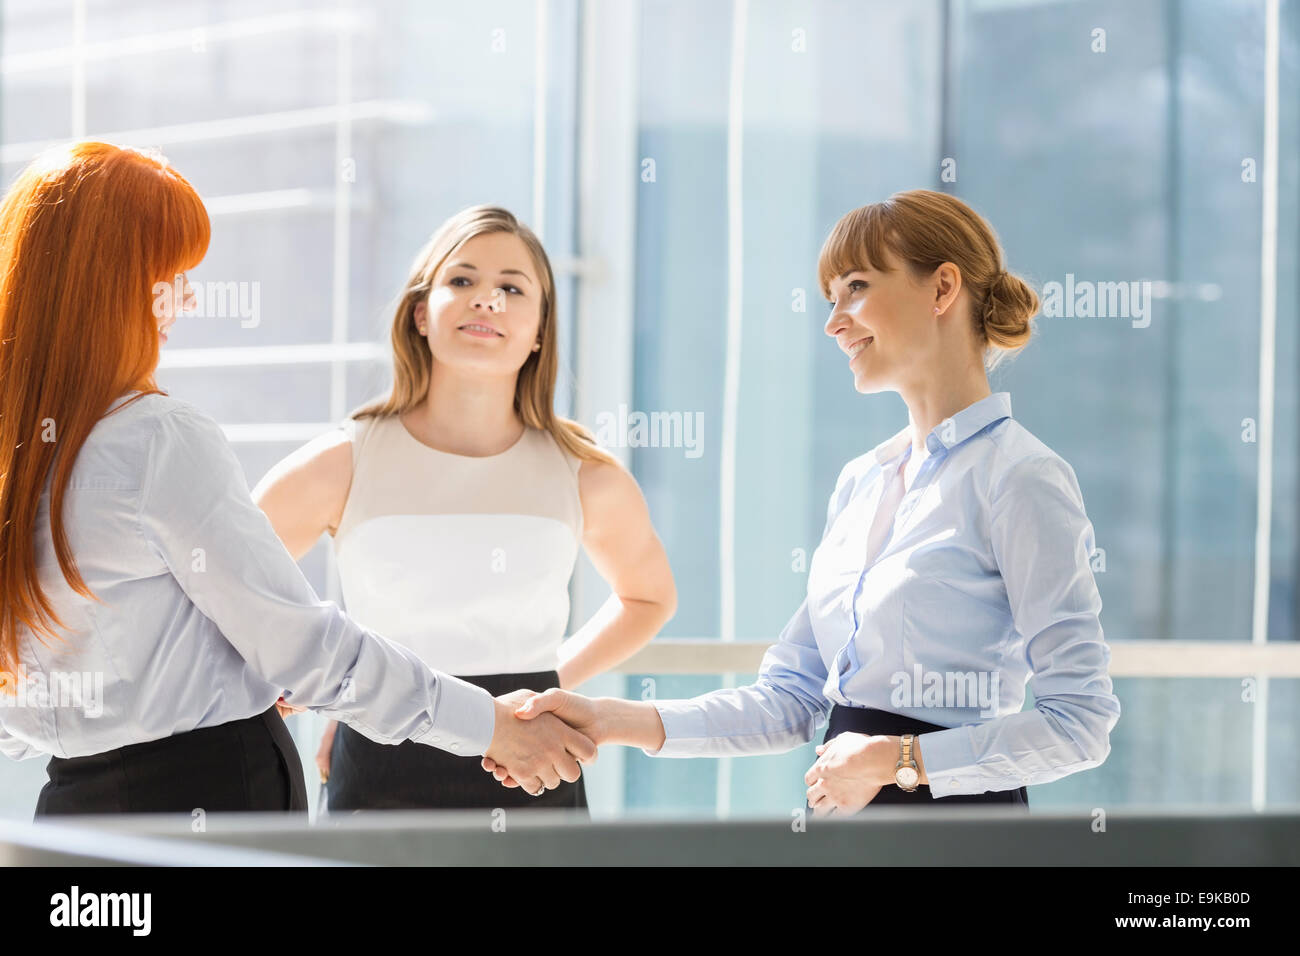 Businesswomen shaking hands in office Banque D'Images